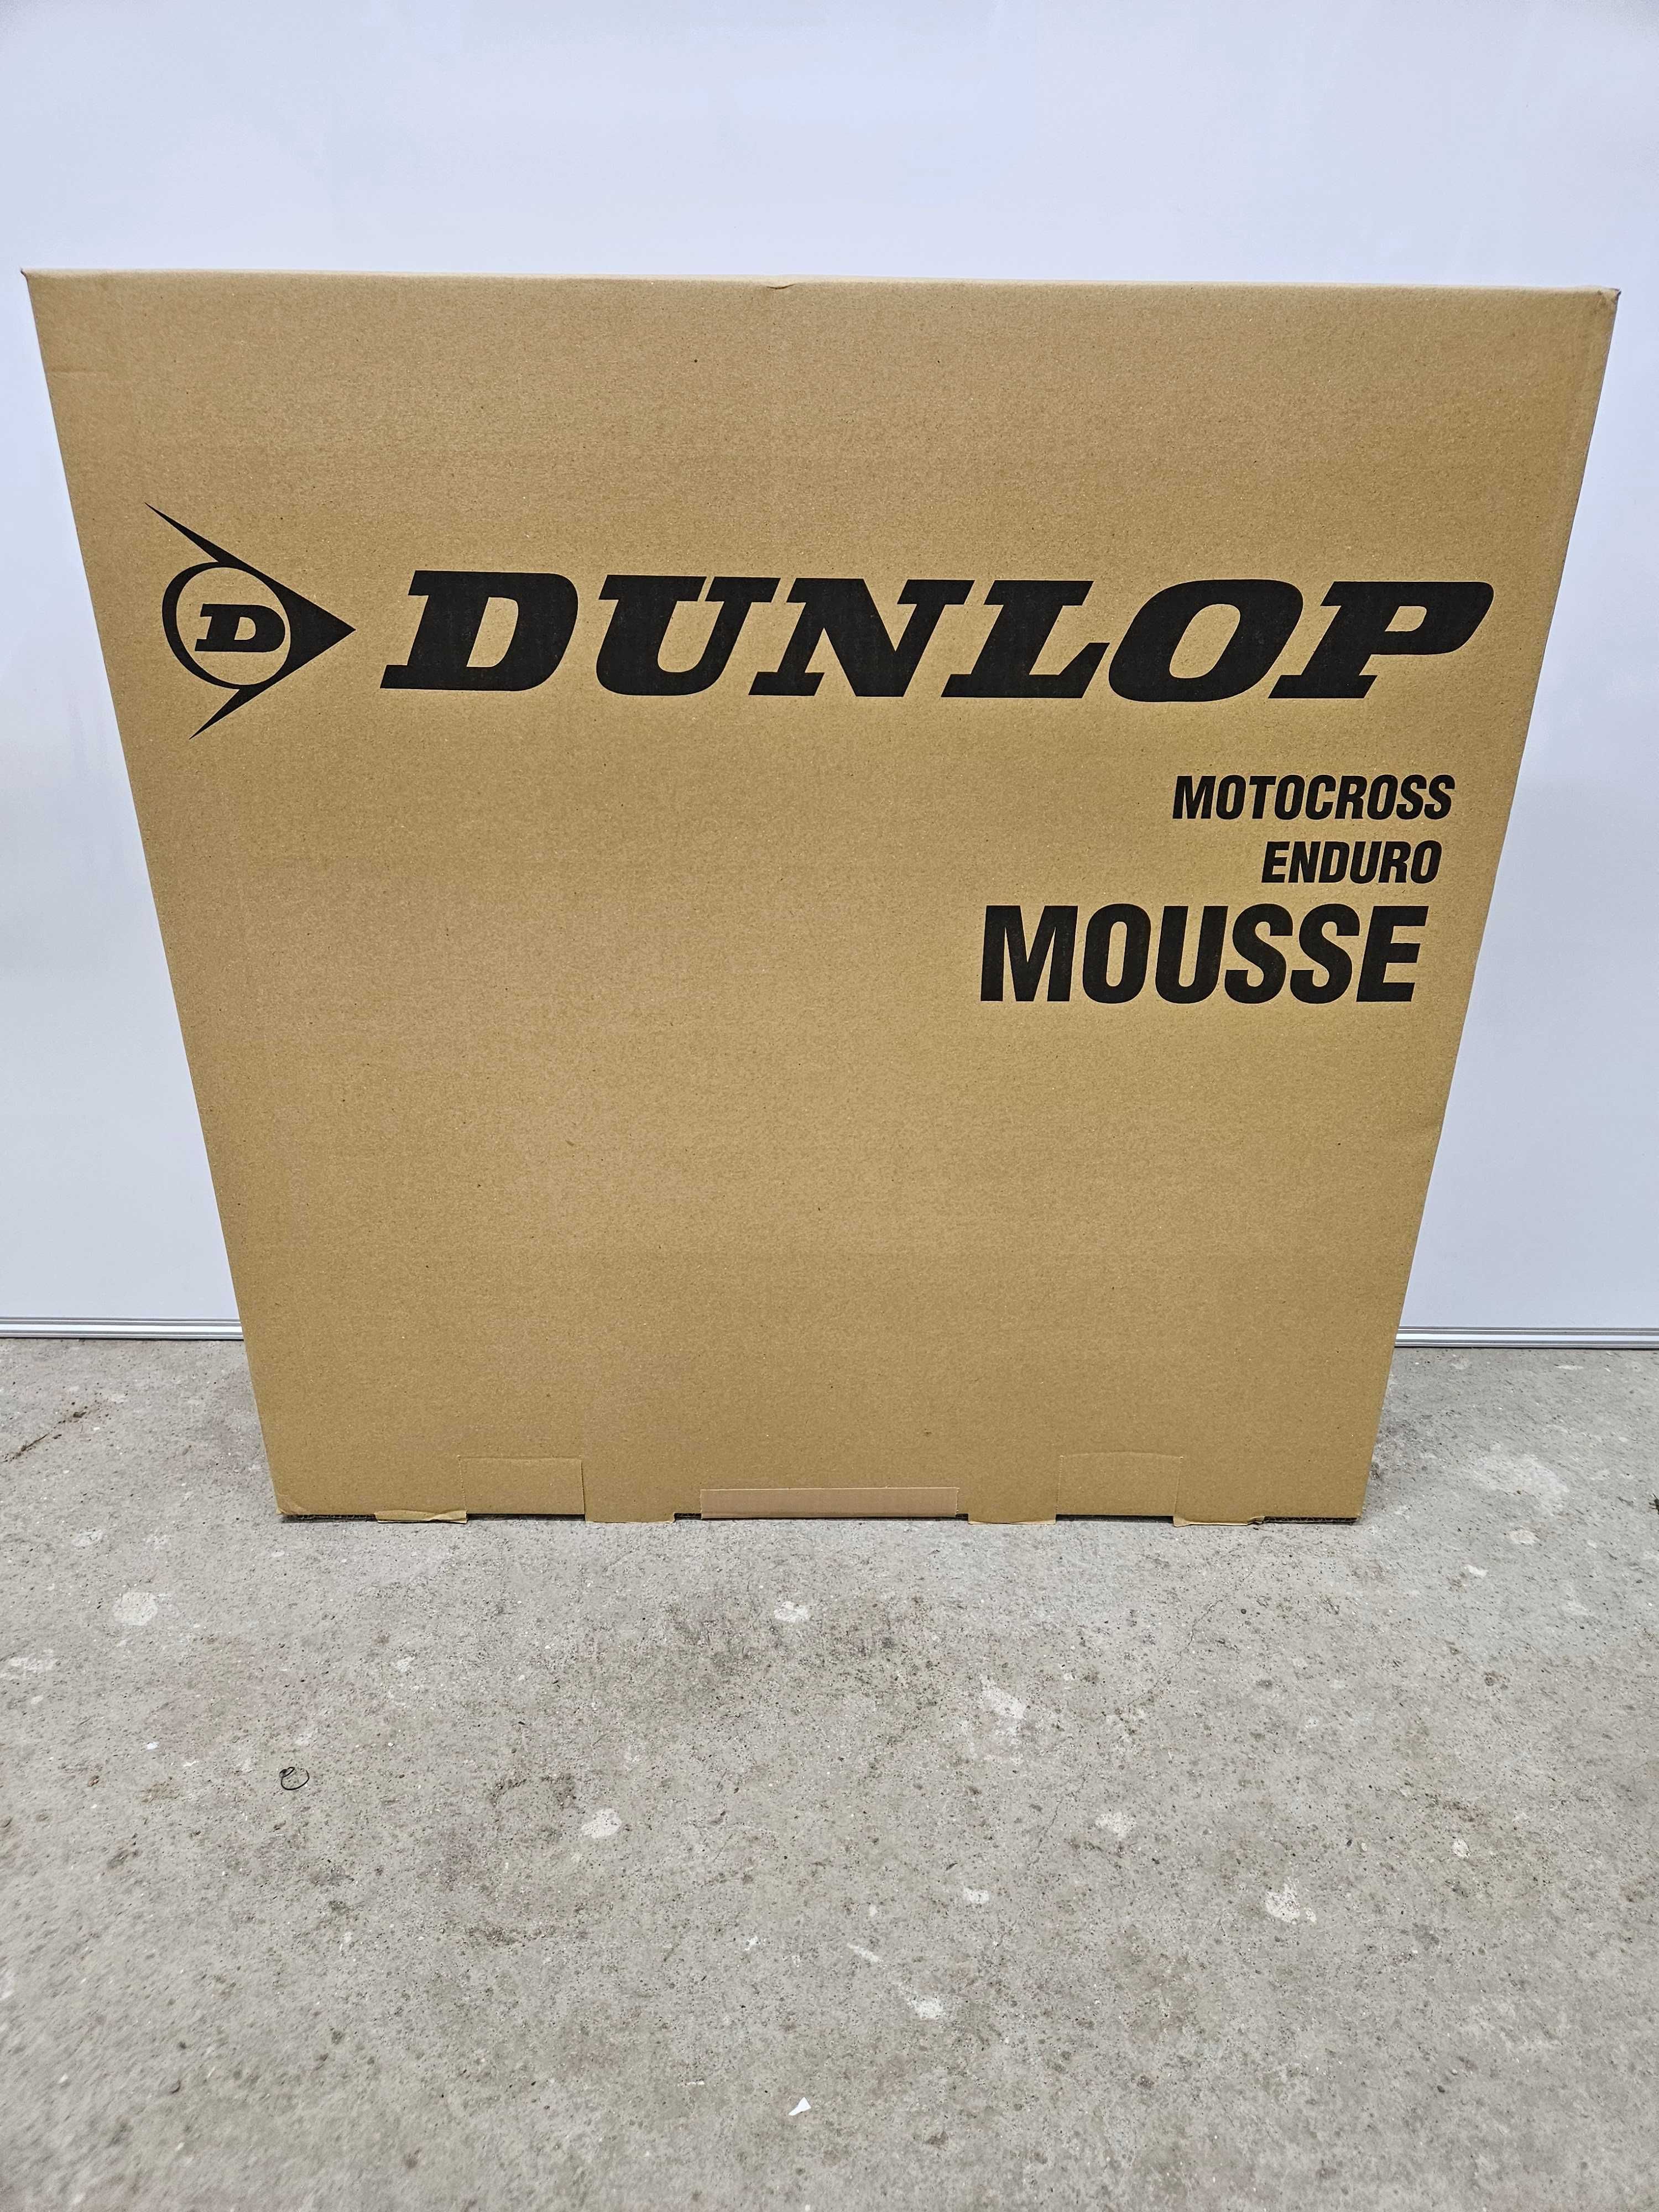 MOUSSE Dunlop 120/90-19 cross enduro pianka, wkład do opon